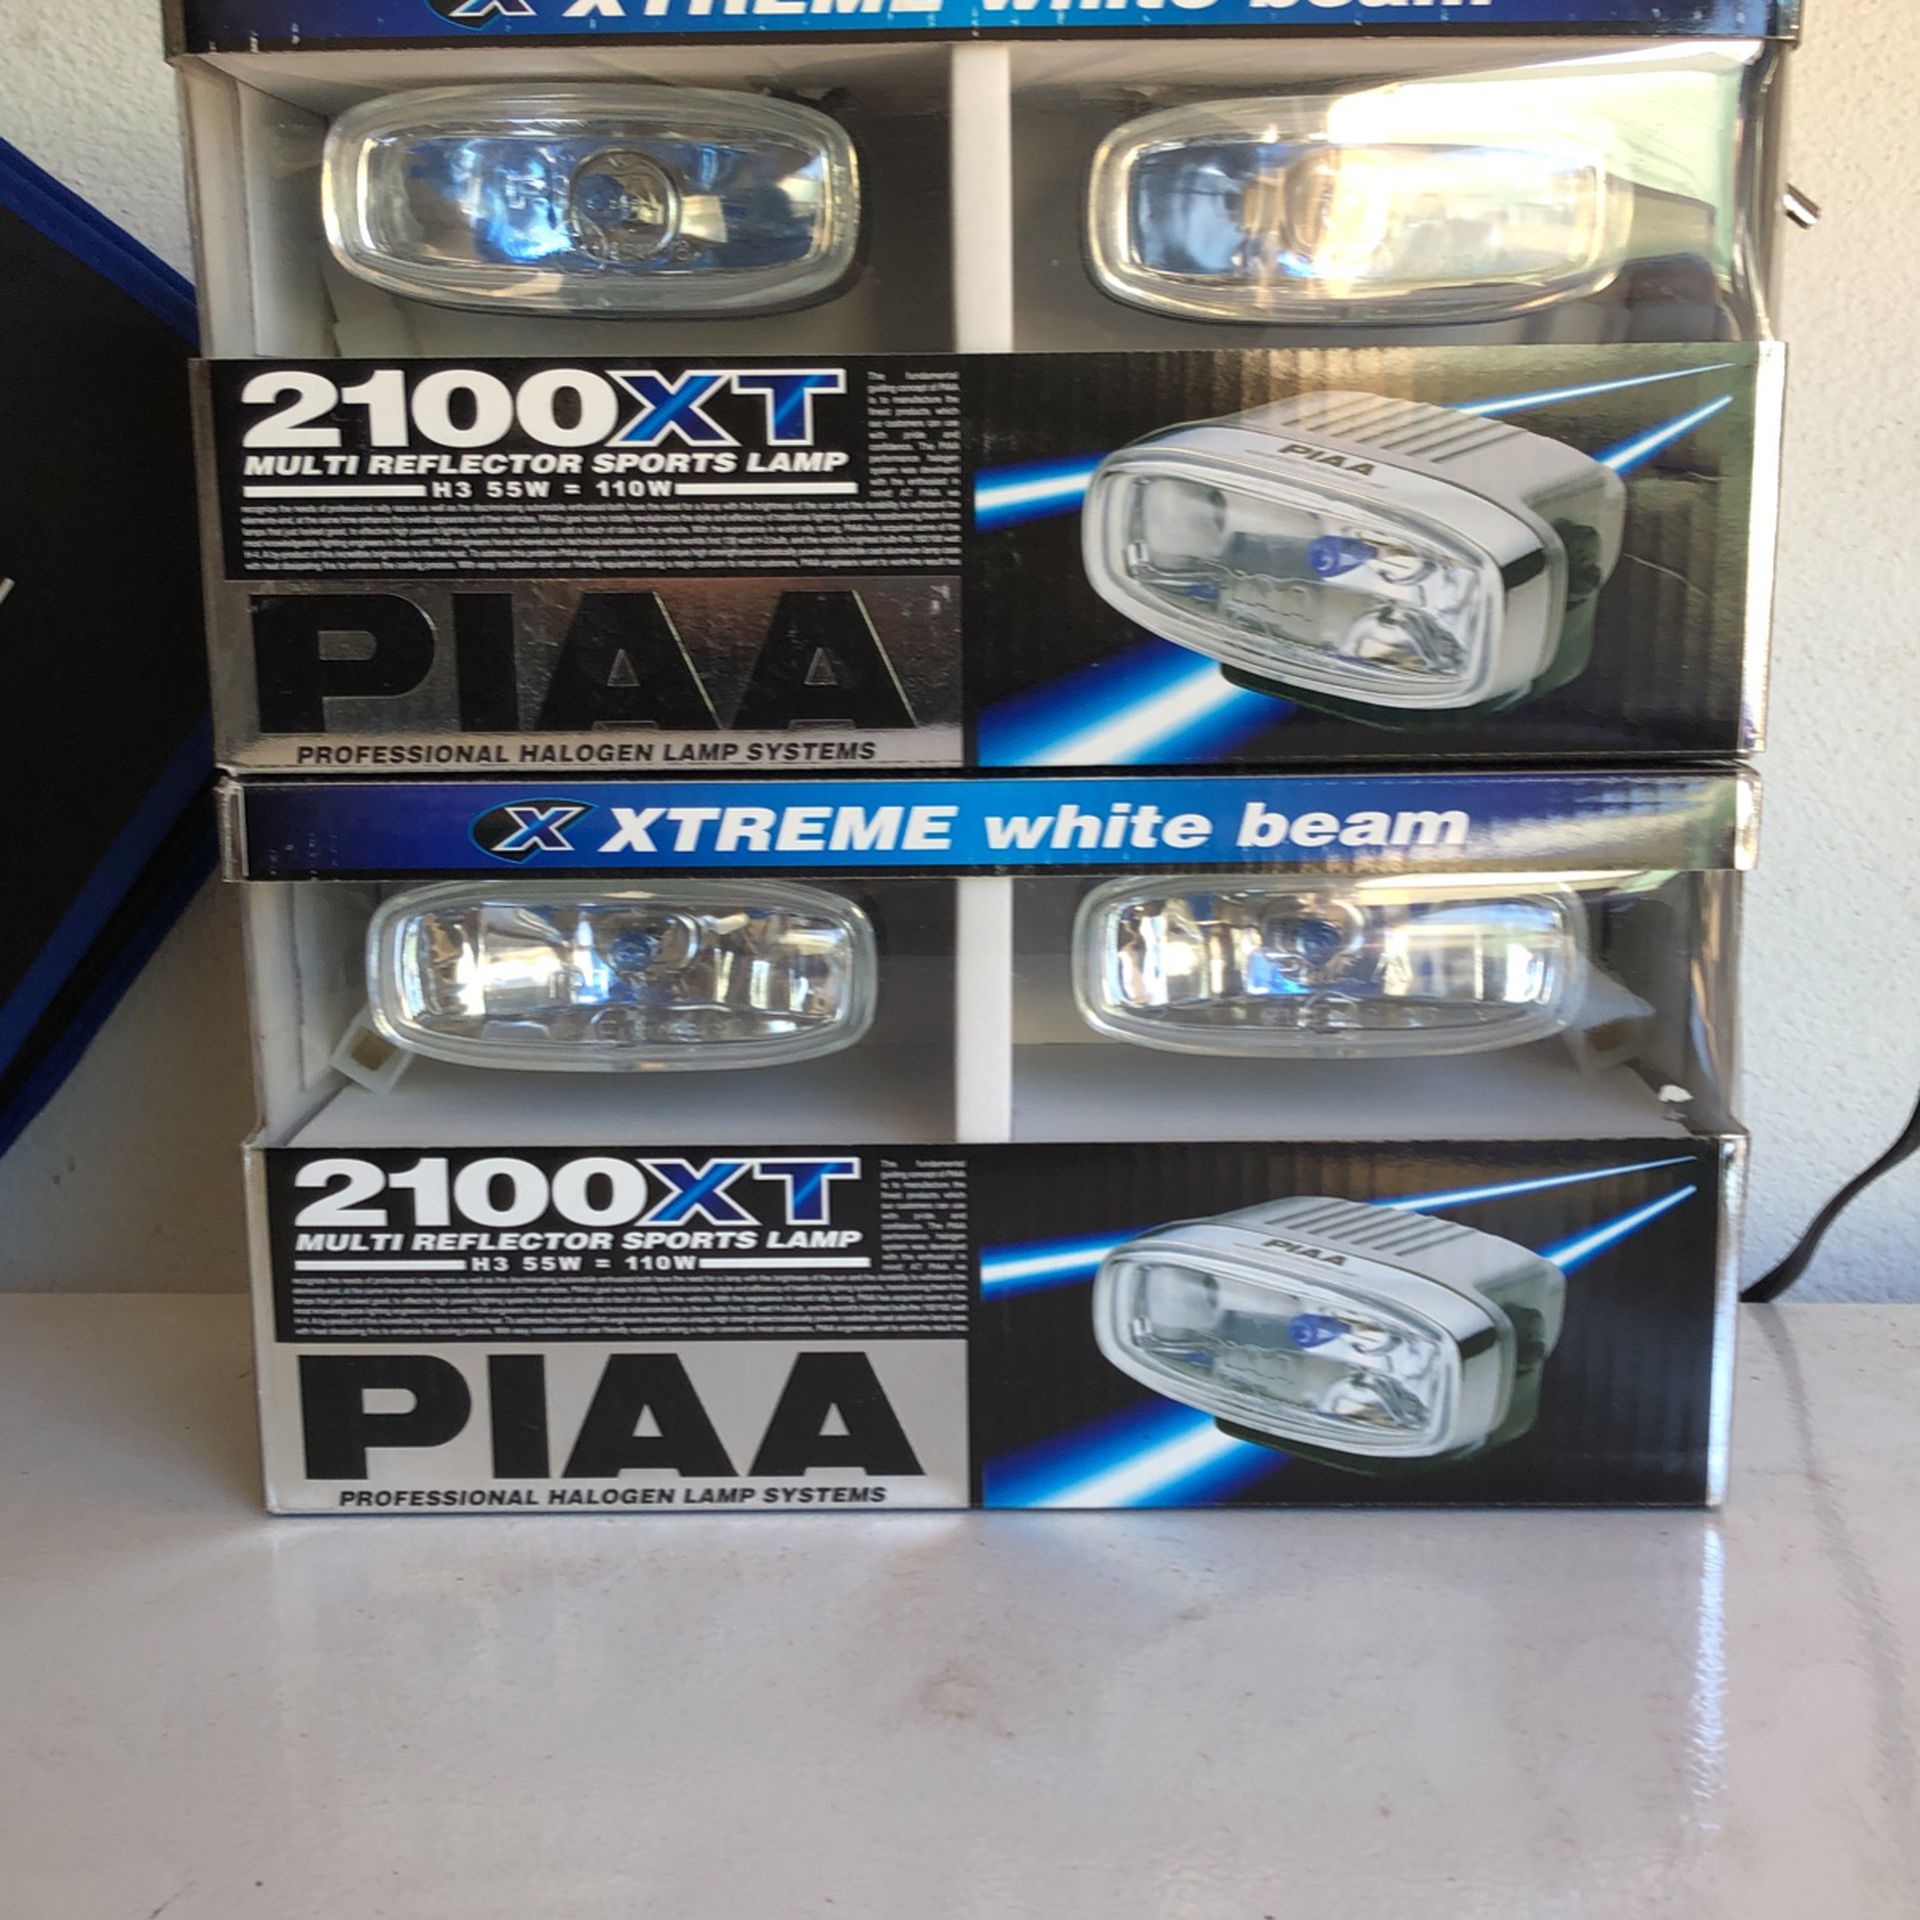 PIAA Halogen Lamps - New In Box -2 Pair